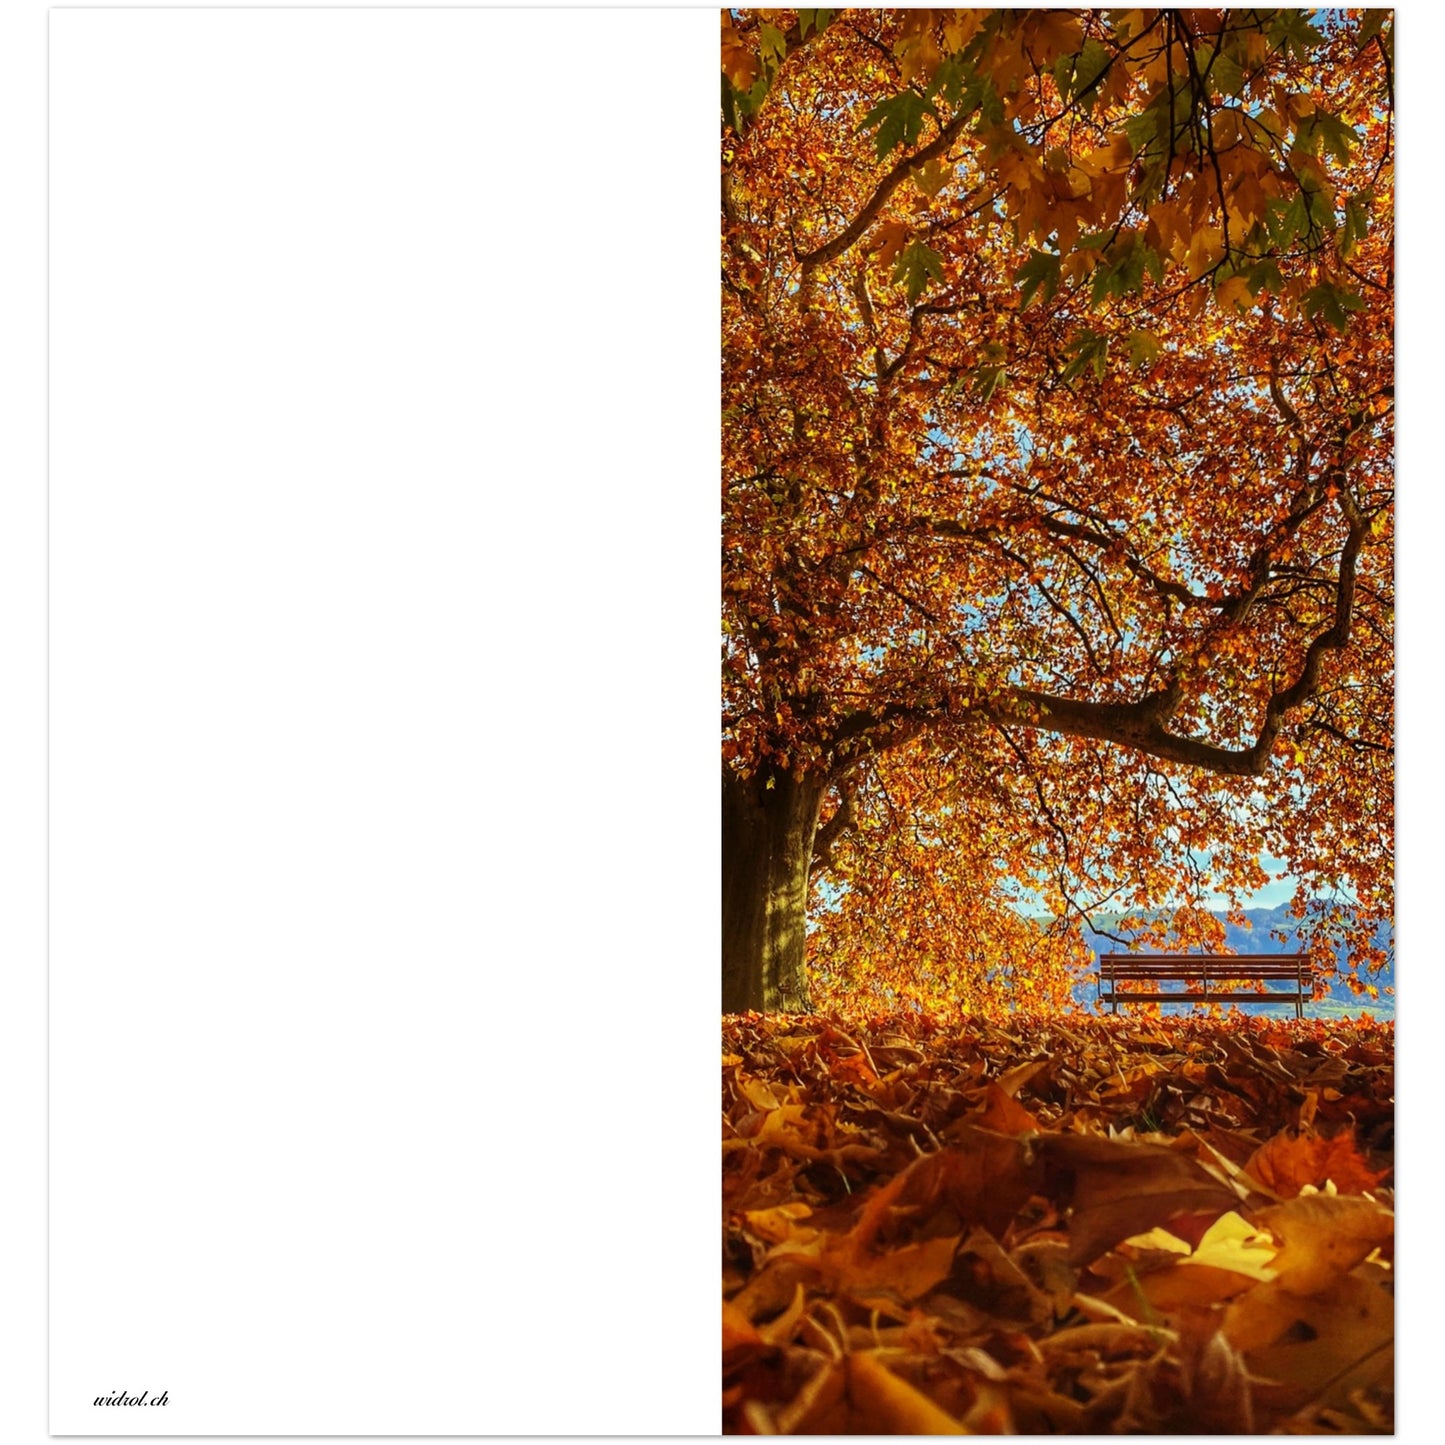 Autumn mood in Villettepark folding cards, set of 10 greeting cards and envelopes 